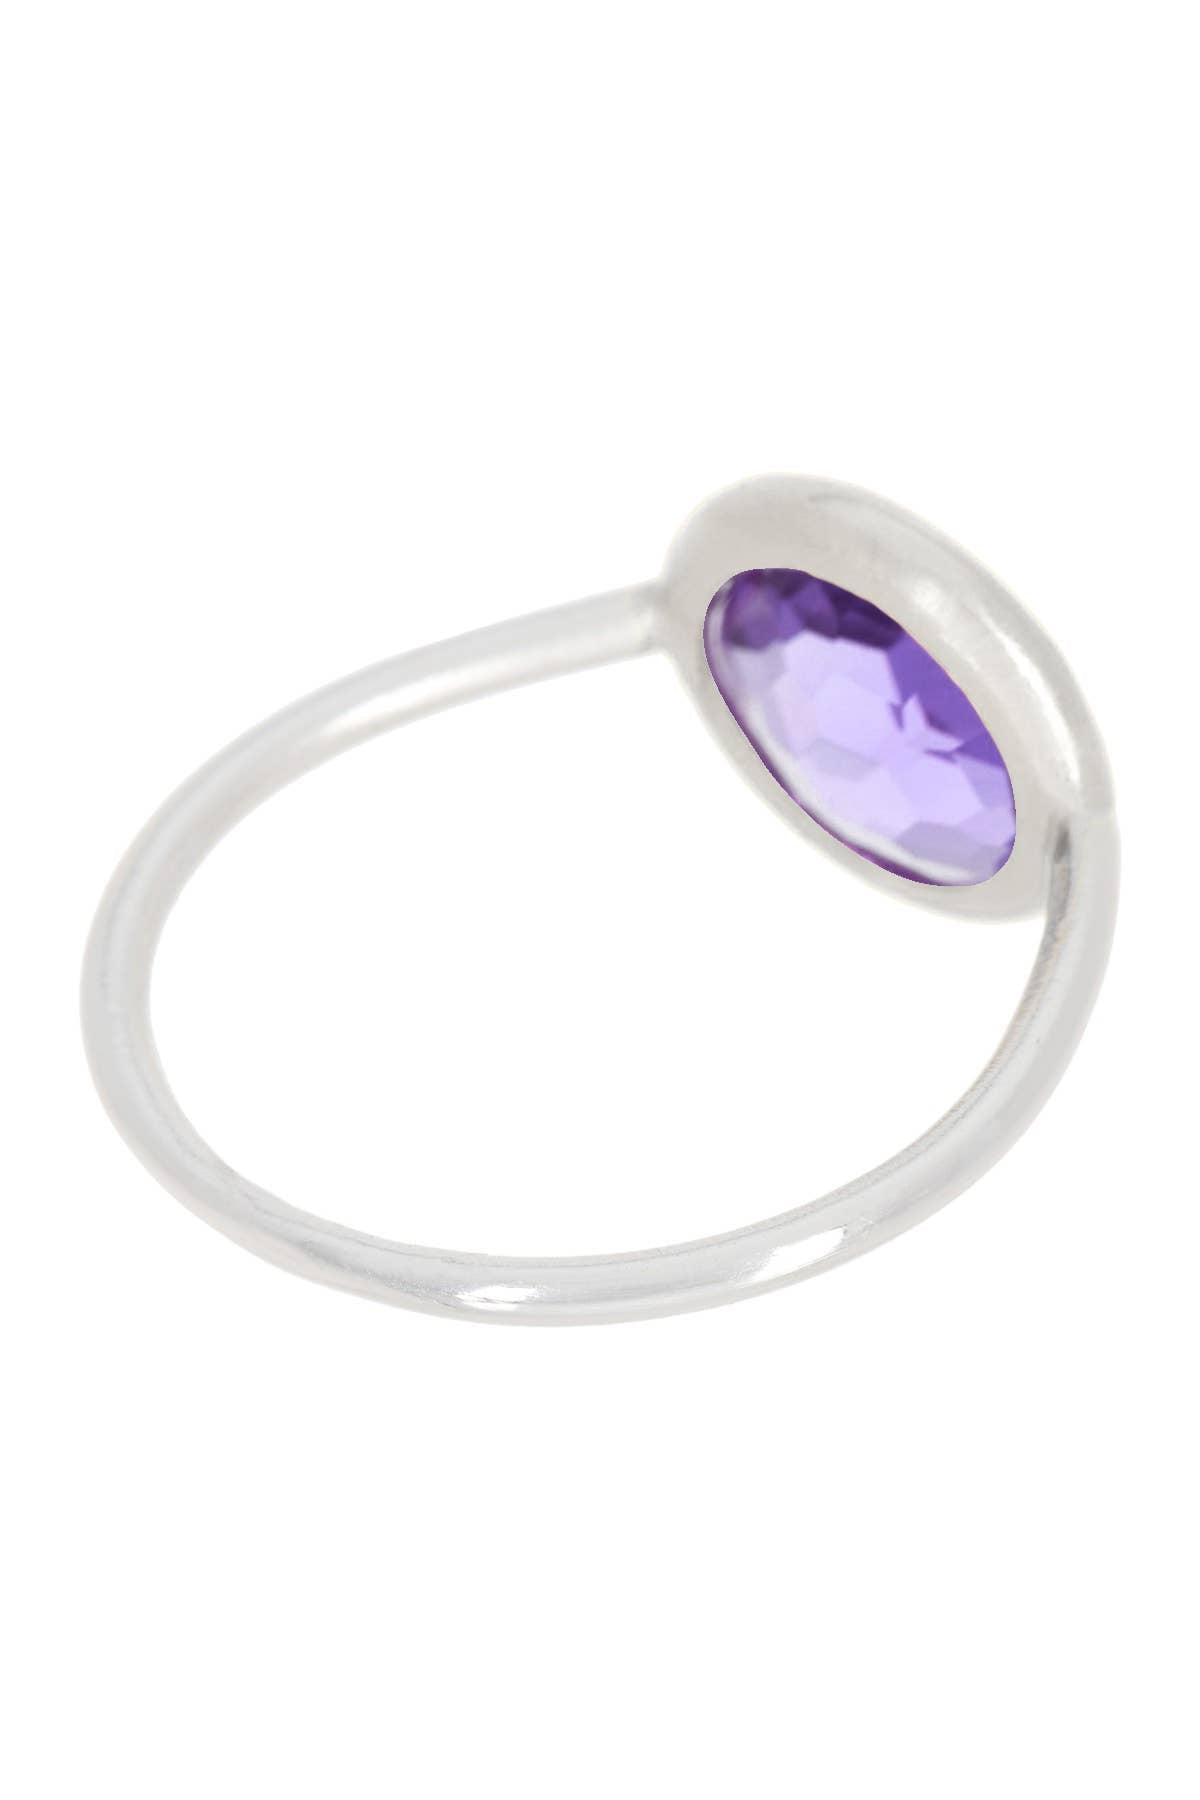 Lavender Crystal Lollipop Ring - SF